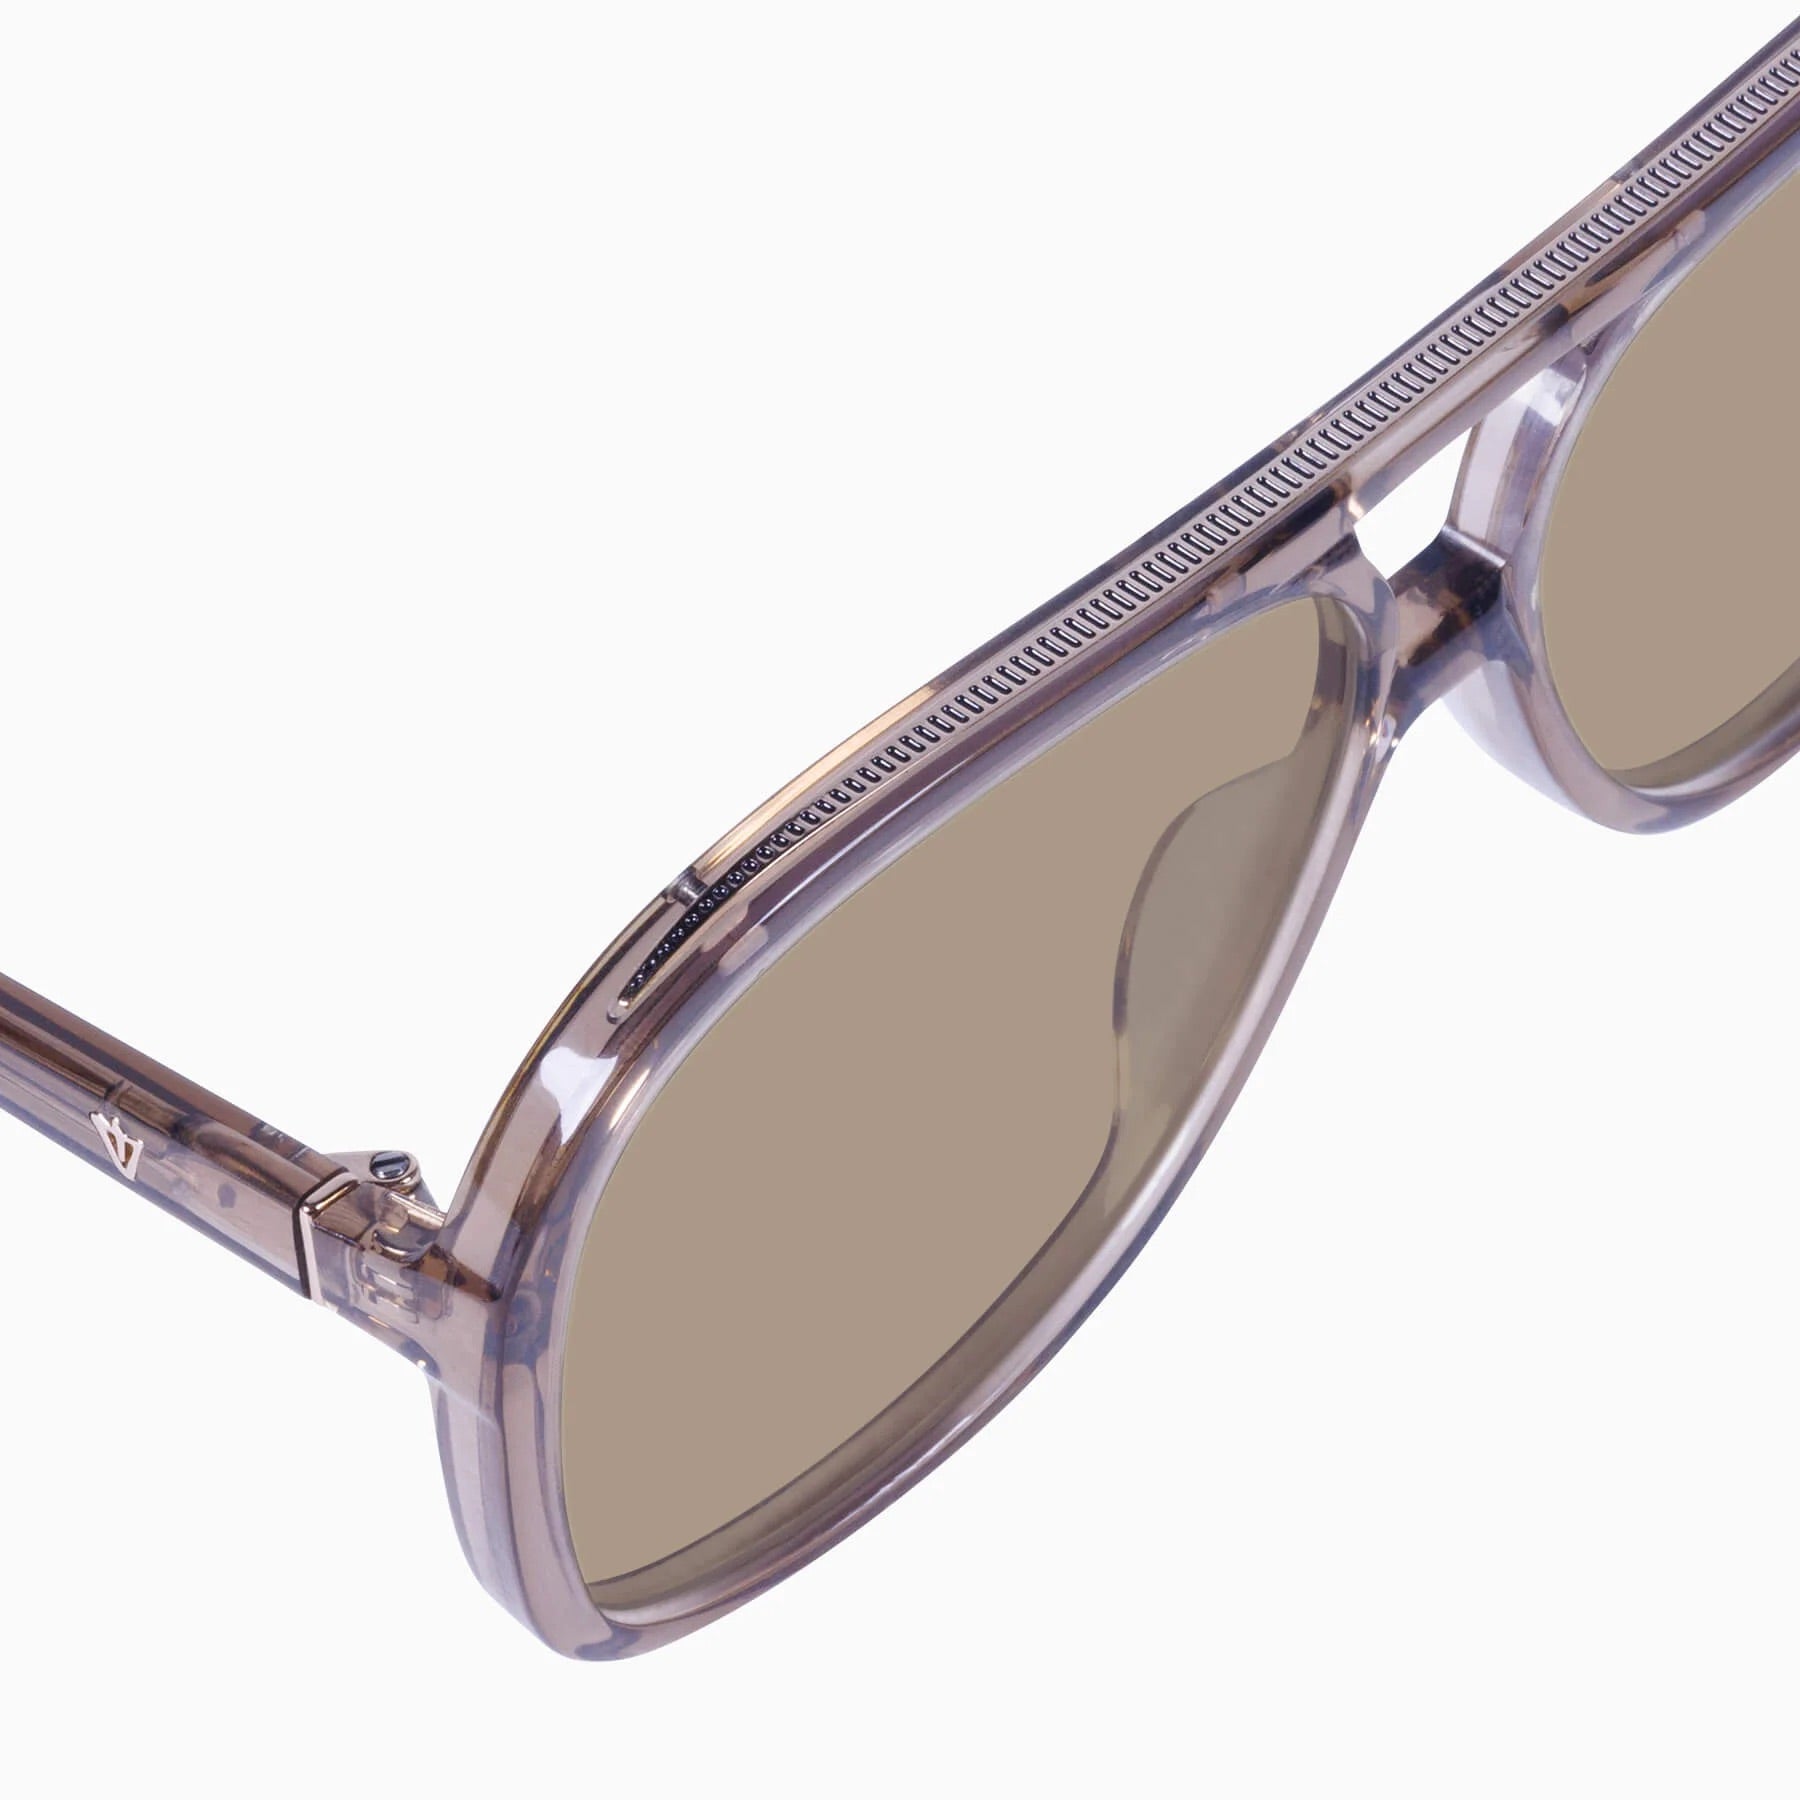 Bang | Sunglasses - Transparent Mocha w. Rose Gold Metal Trim / Light Brown Lens